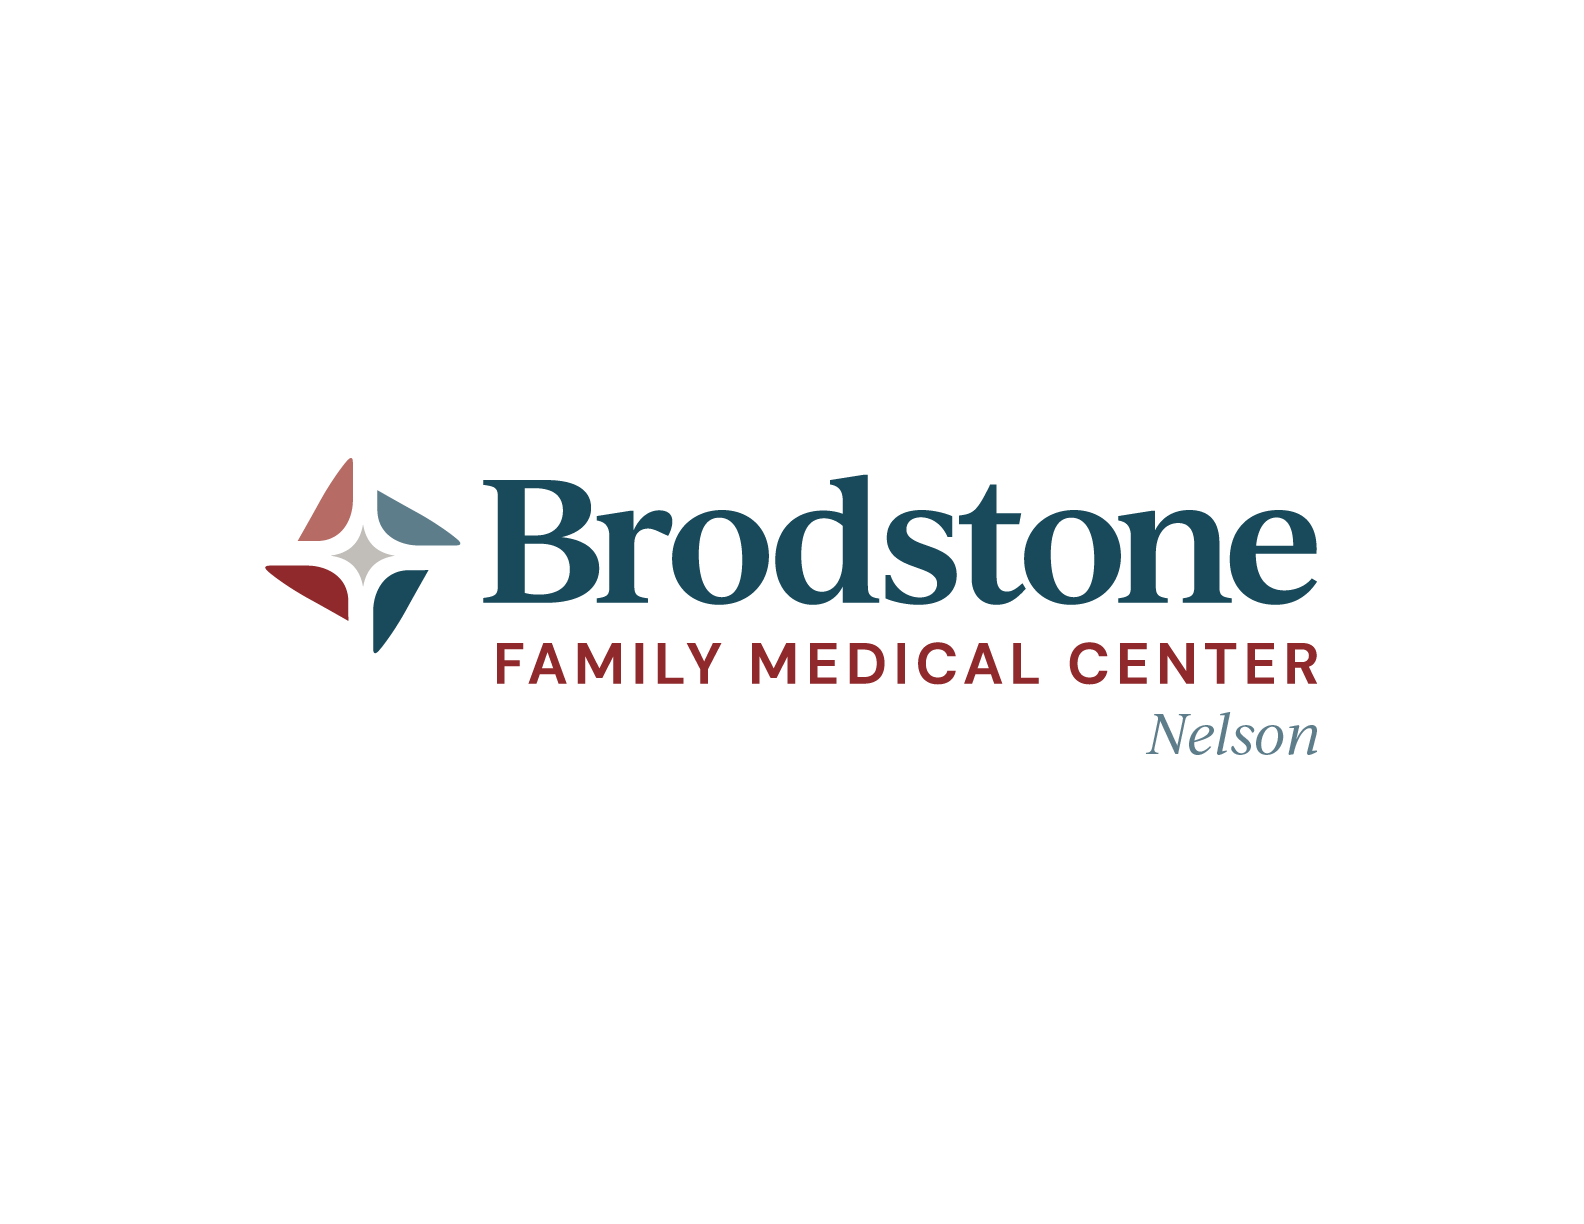 Brodstone Healthcare Brand Guide Nelson 